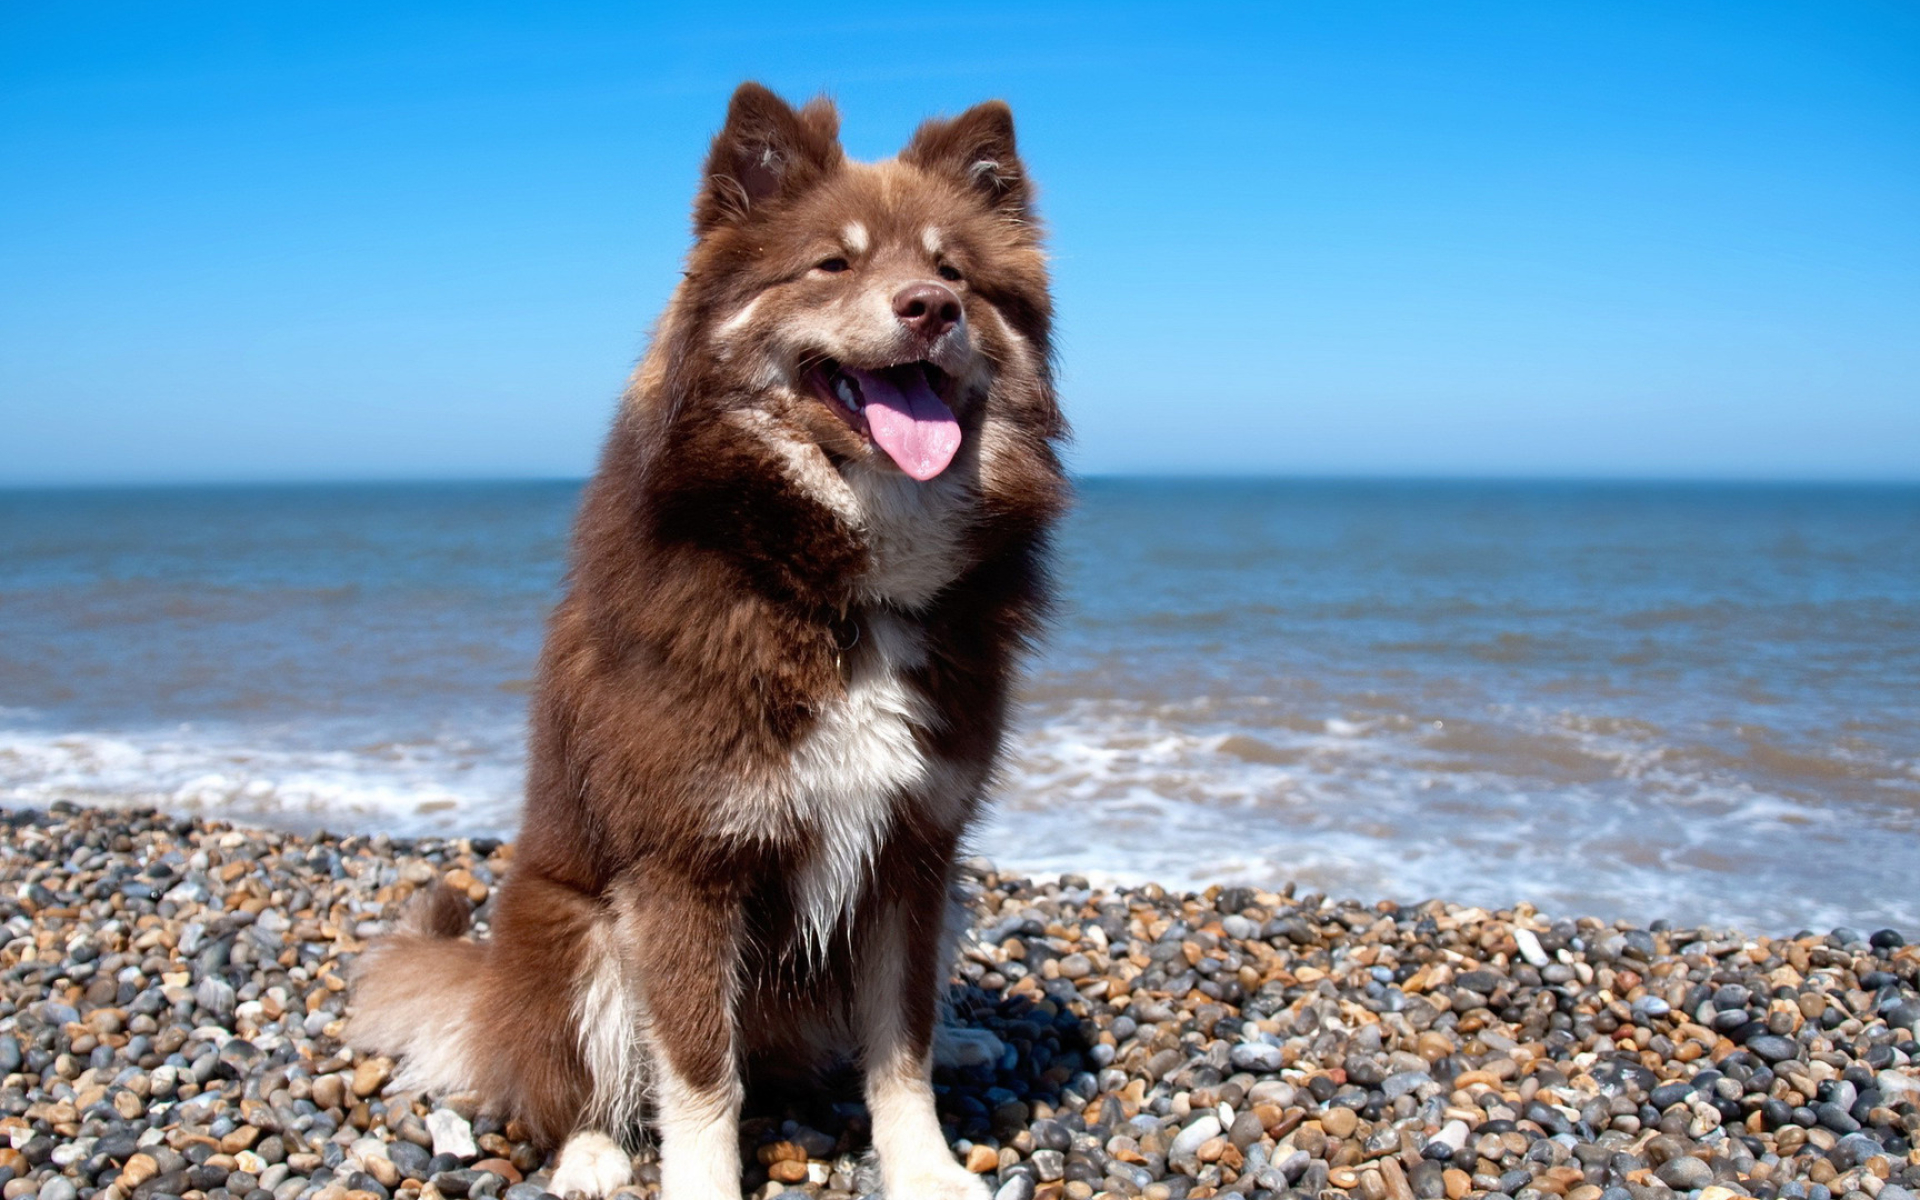 Dog on the beach wallpaper, Beachy background, Tropical escape, Sandy shores, 1920x1200 HD Desktop